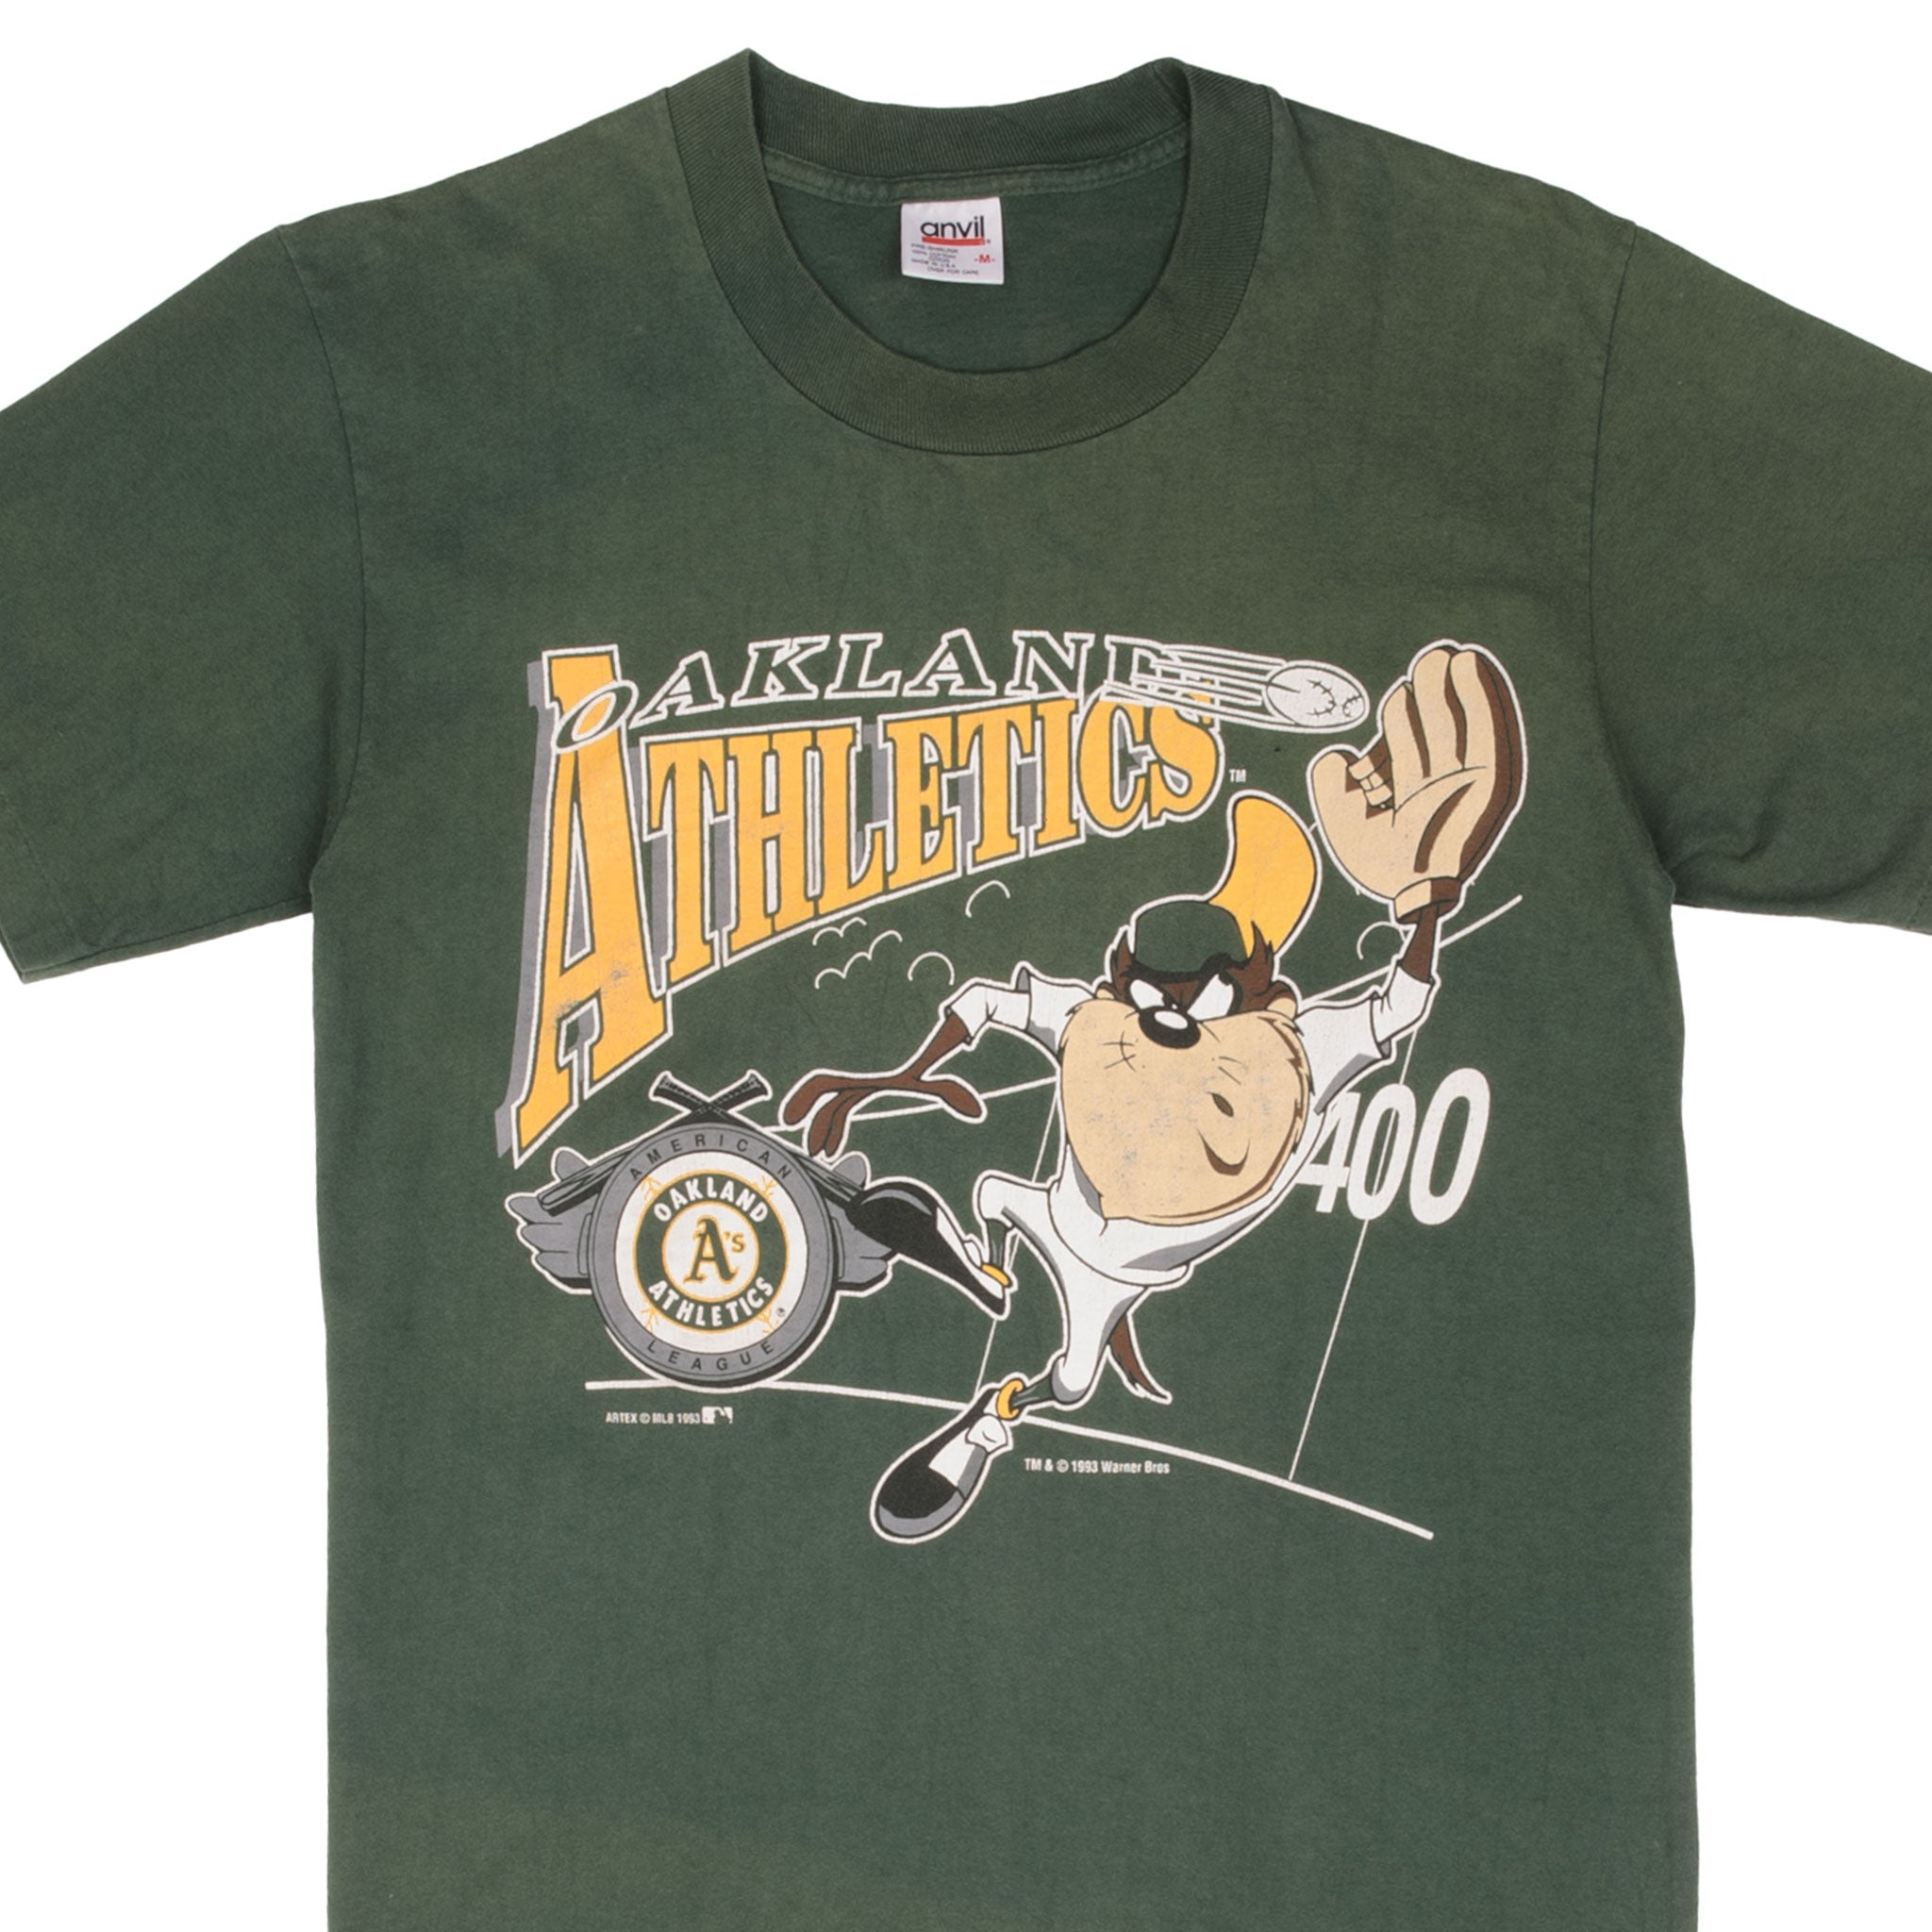 Vintage MLB Oakland Athletics Tee Shirts, Sweatshirts, Jerseys and 